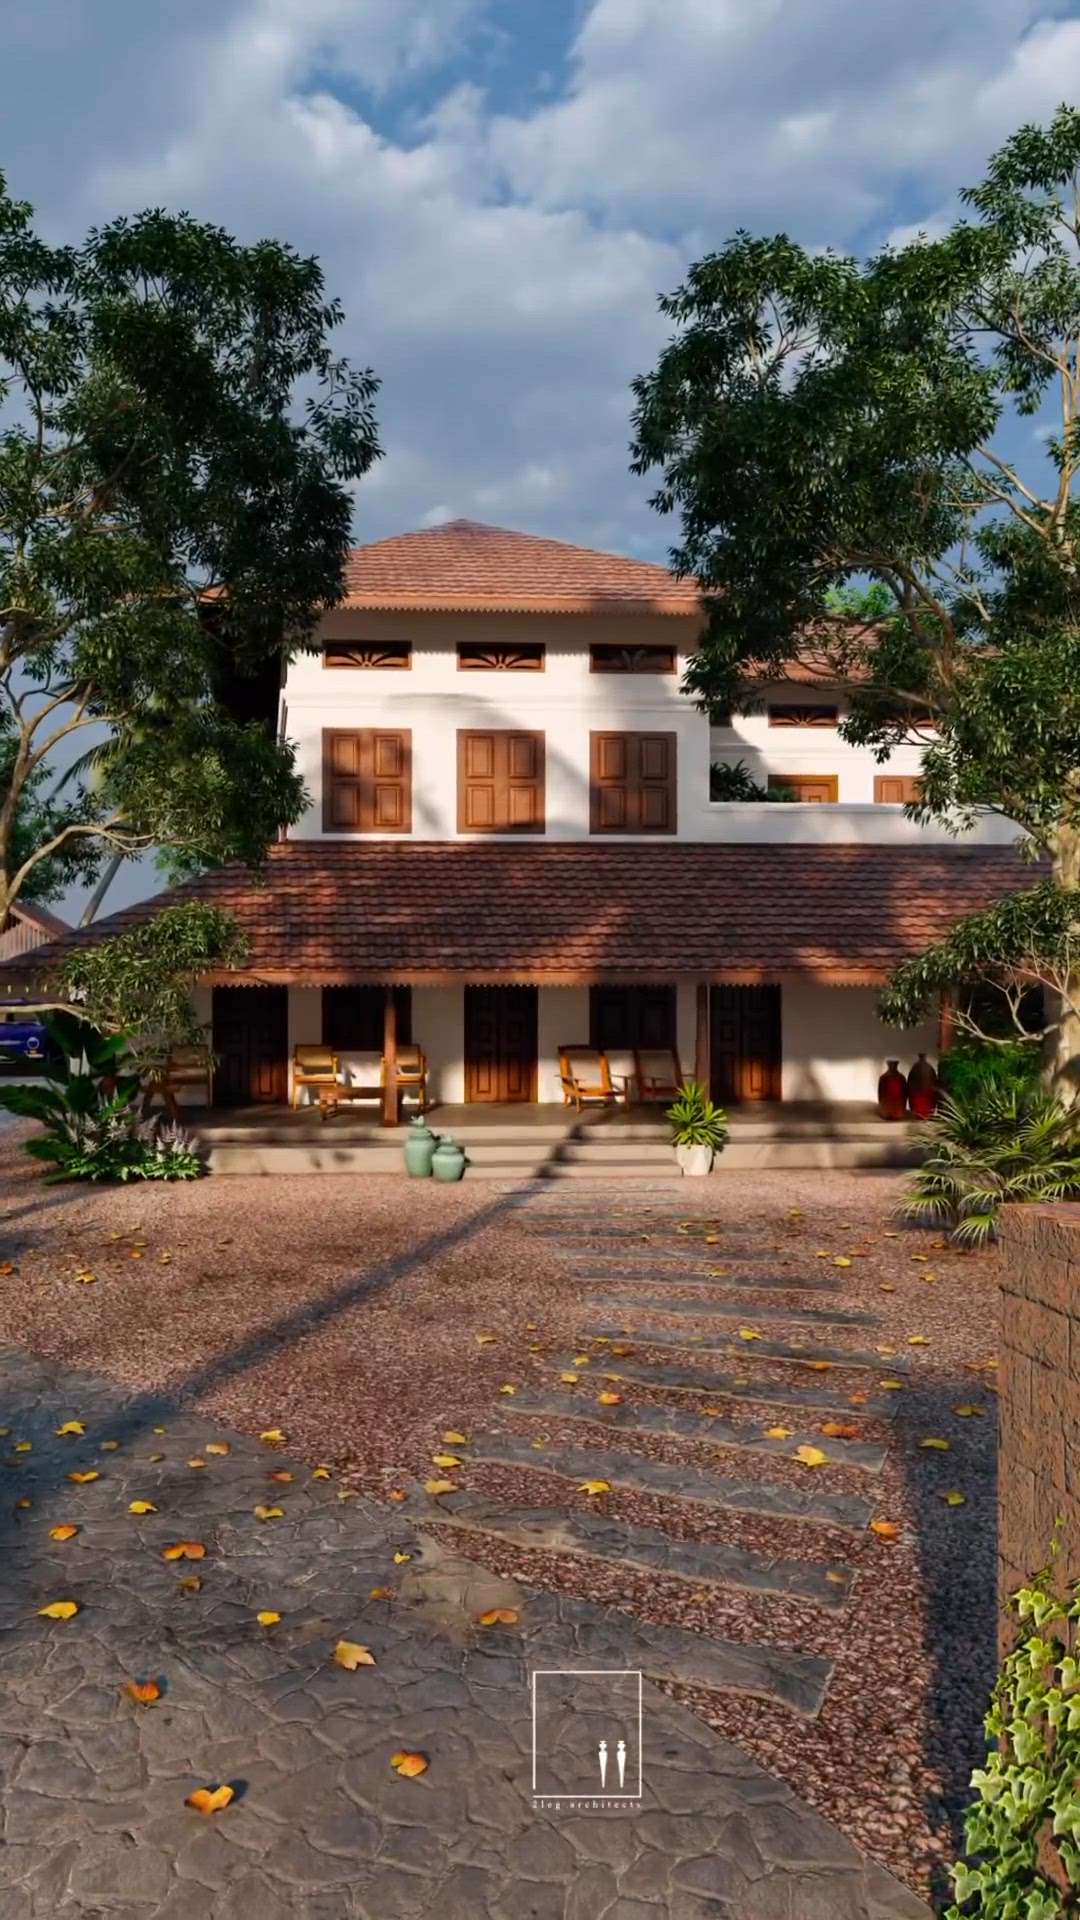 BEFORE & AFTER

Project type : Renovation
പഴയ വീട് പൊളിക്കാതെ പുതിയതായി നിർമ്മിക്കാം ….

Pallikuth tharavad ( 80 years old )

Client : Kolakkanni family
Location : Areekode Malappuram.

Architect firm : 2leg_architecture
@2leg_architects